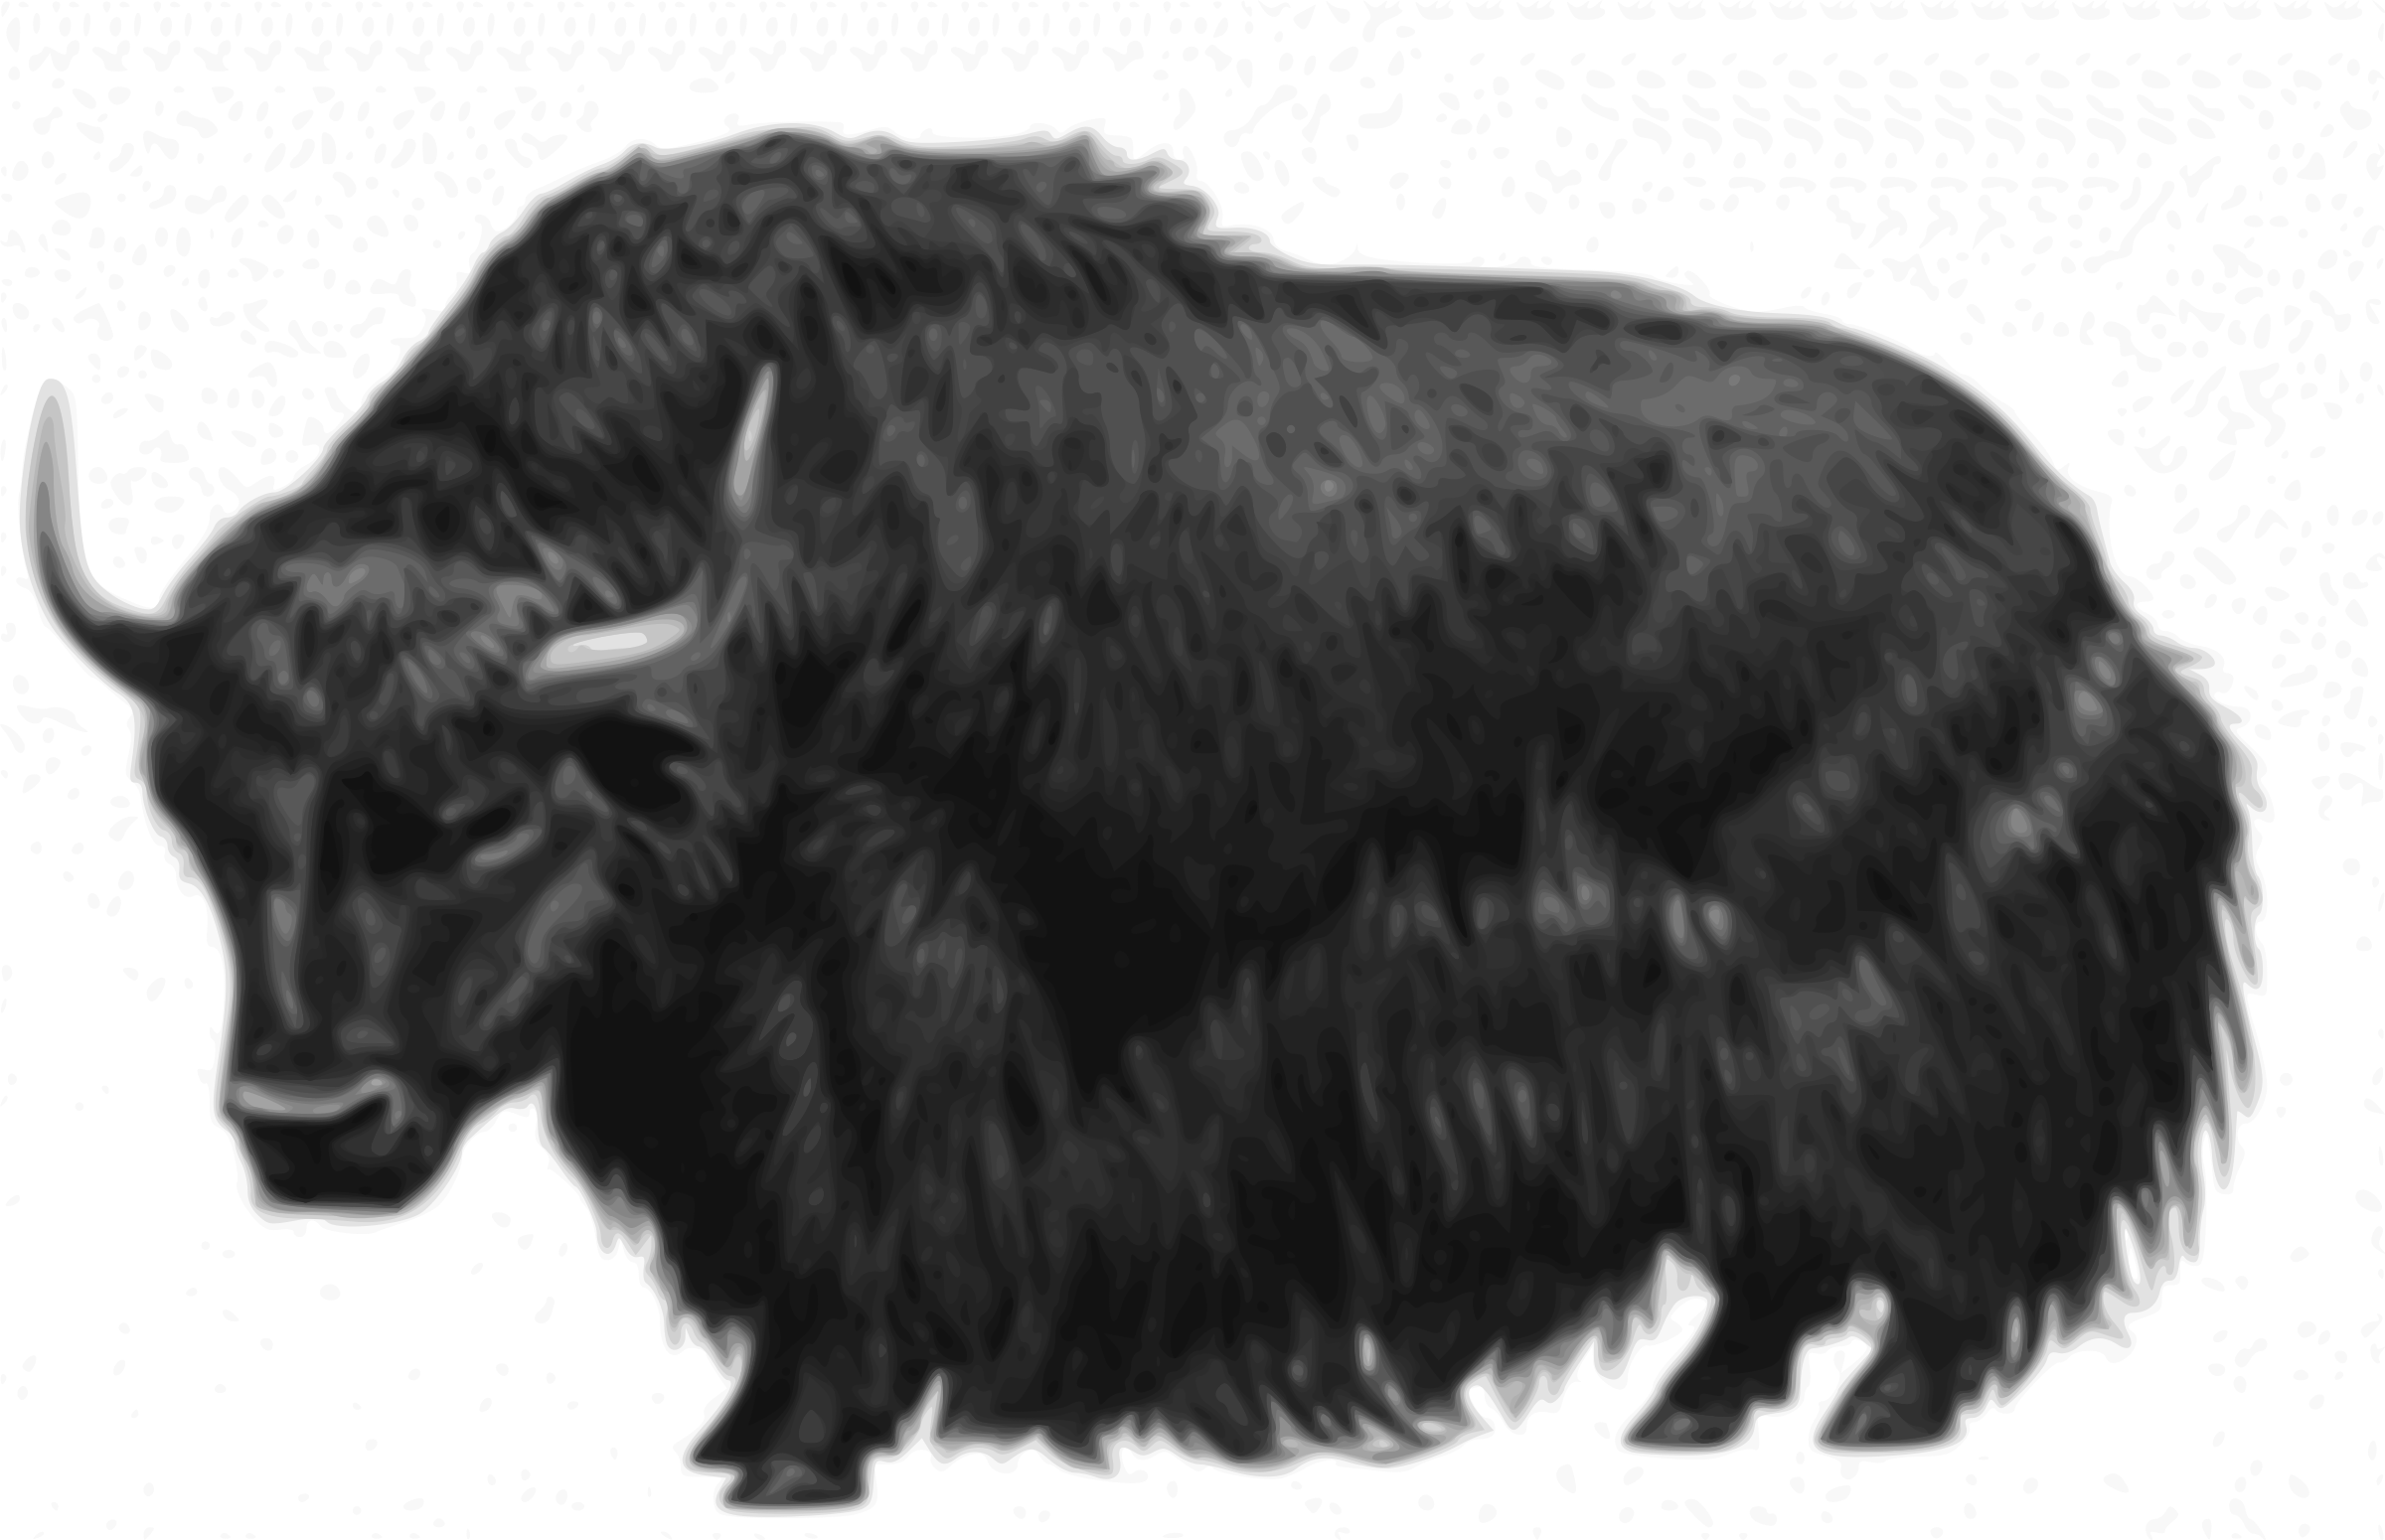 Image - Giant Bison (Wrangler